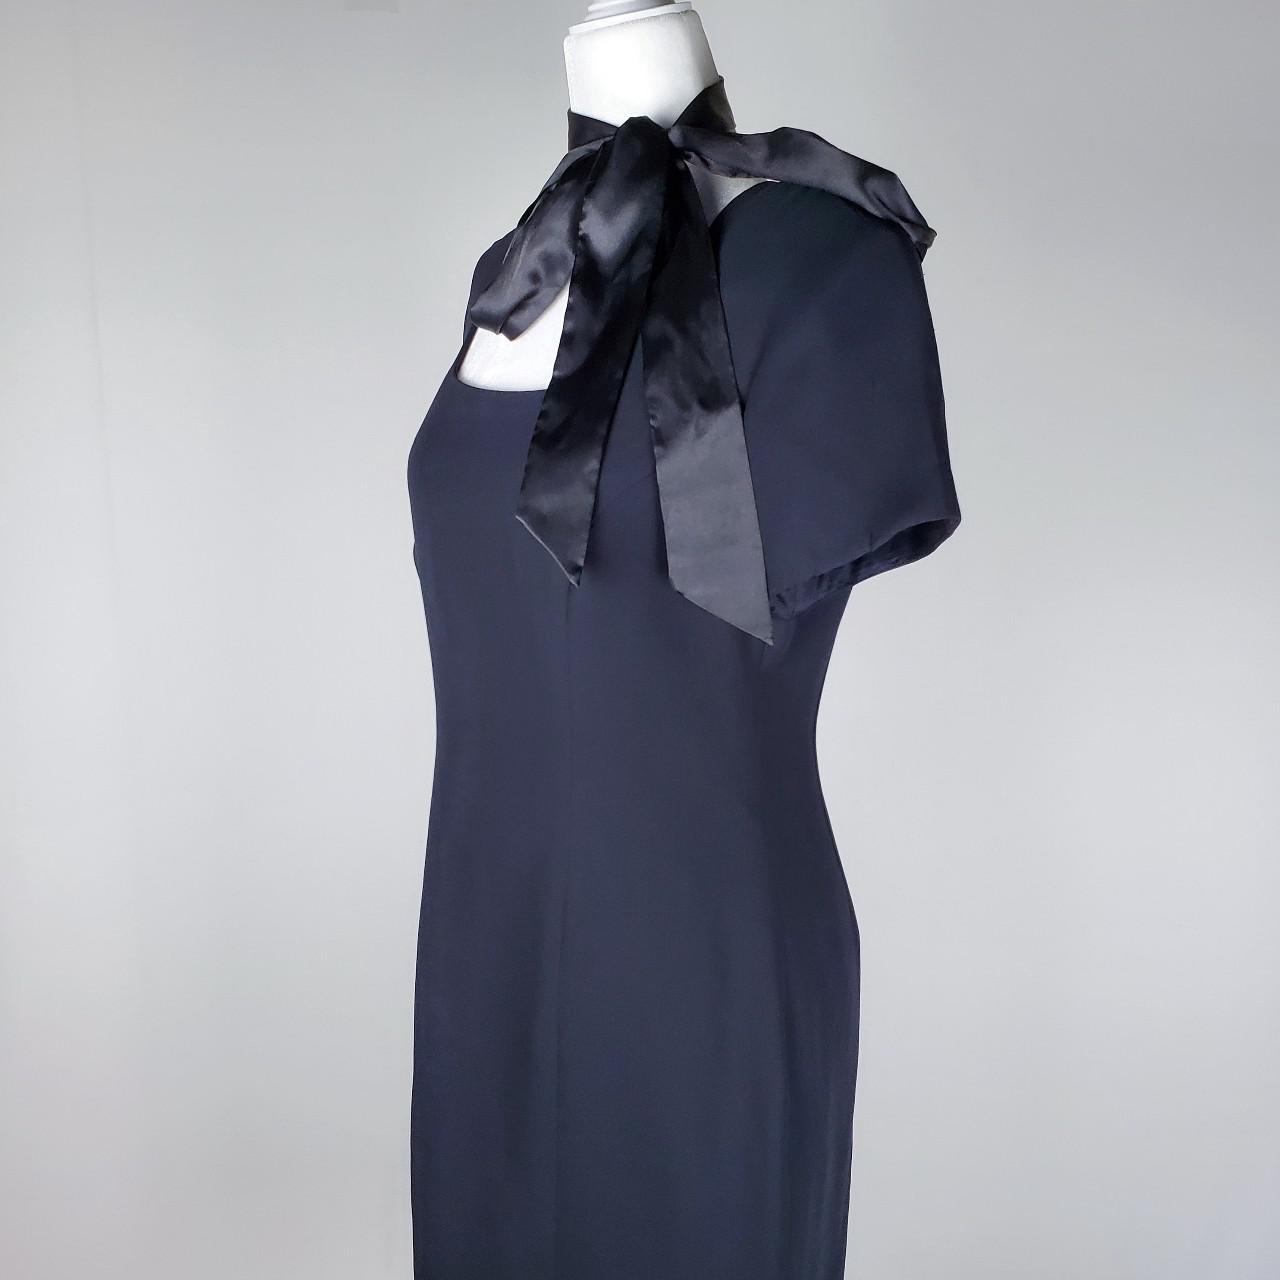 Liz Claiborne Women's Black Dress (2)